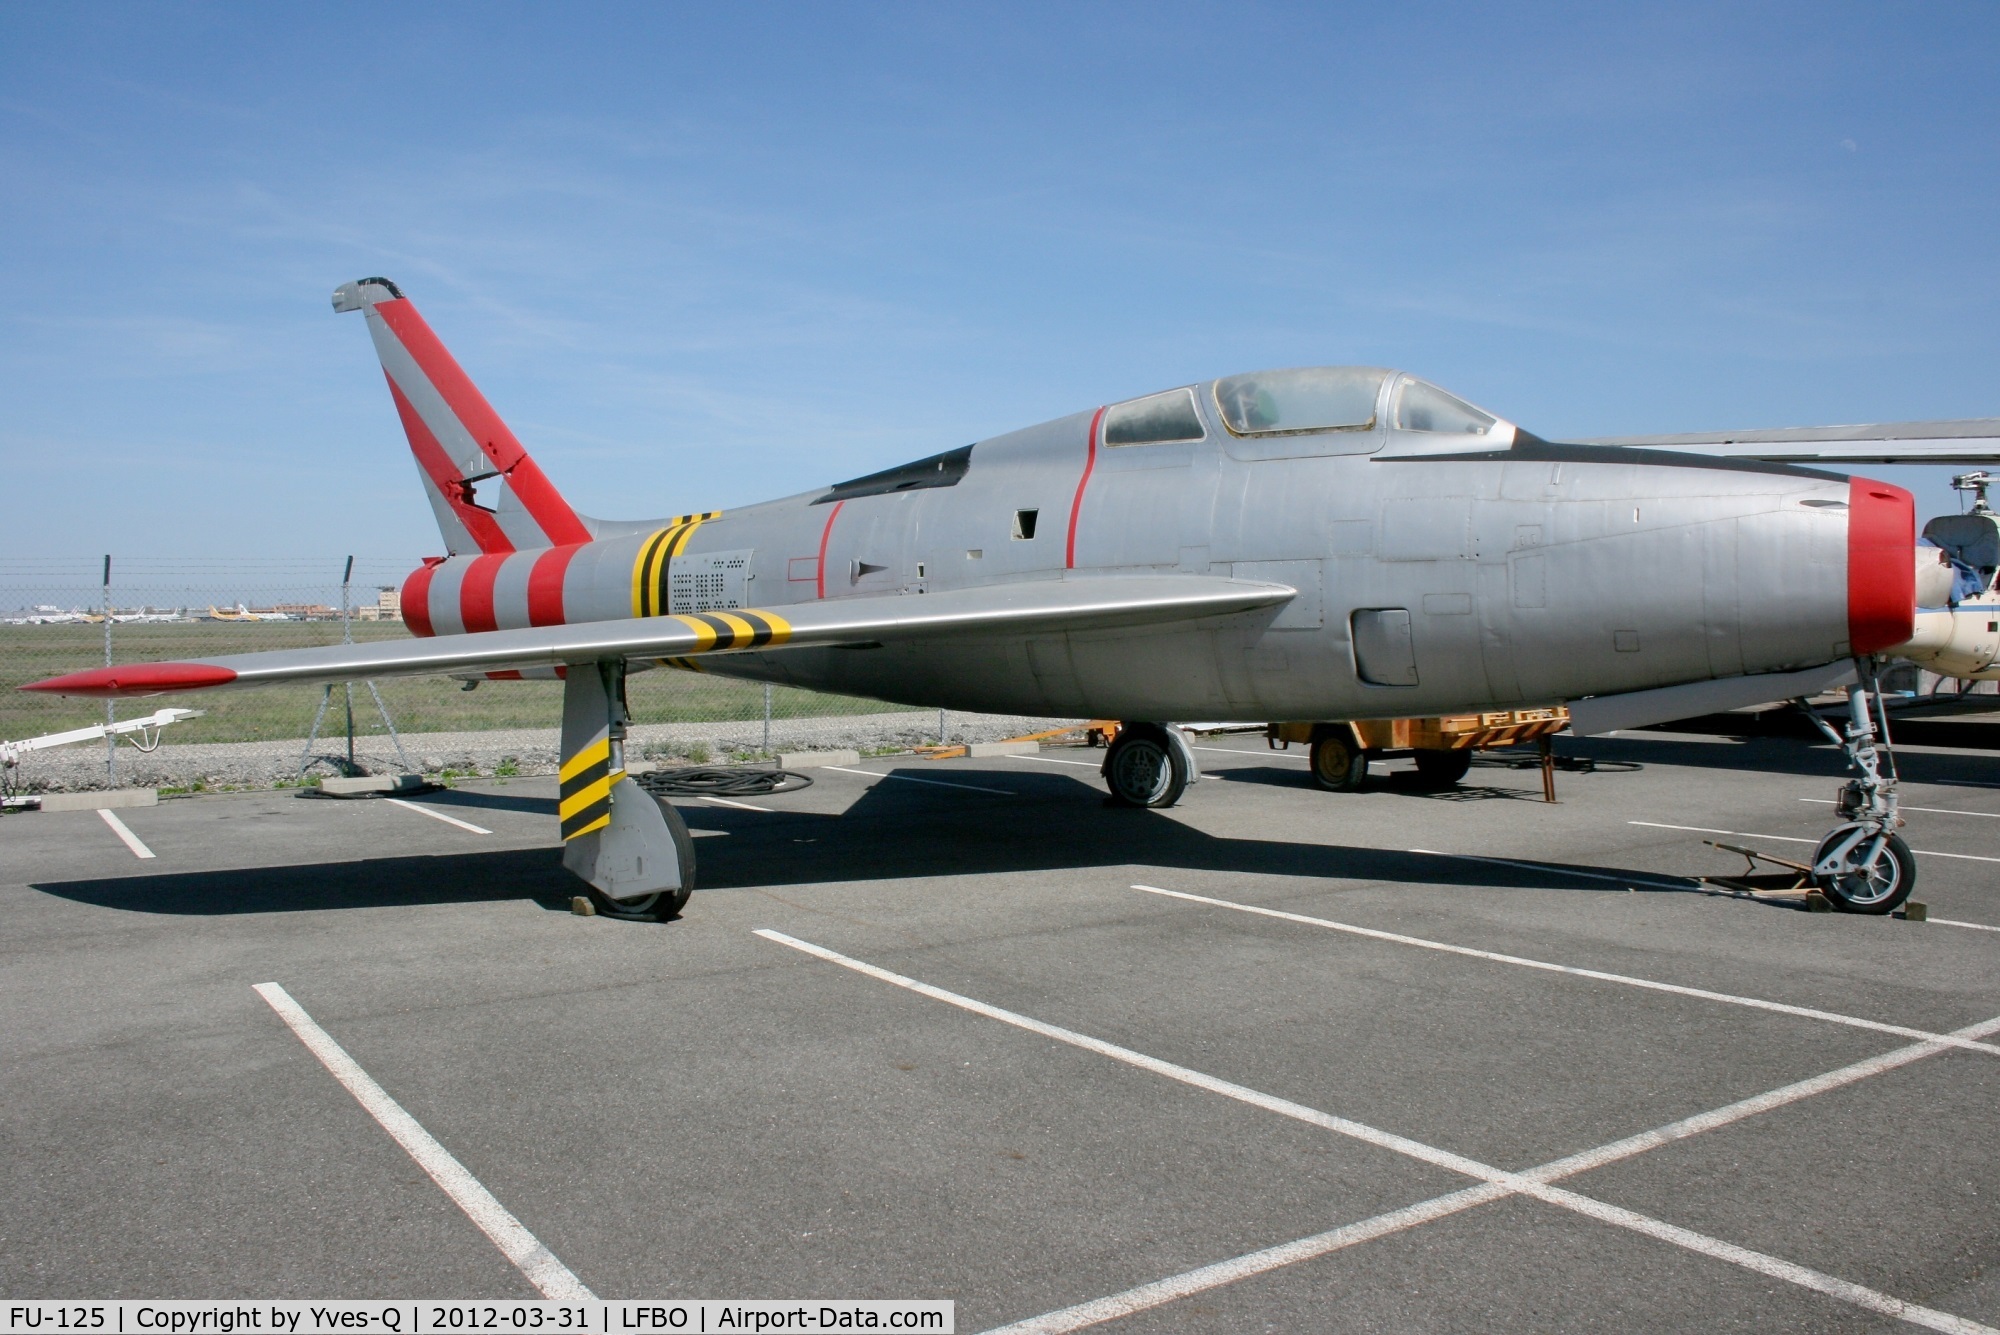 FU-125, Republic F-84F Thunderstreak C/N Not found 53-6760, Republic F-84F Thunderstreak, Ailes Anciennes Museum Toulouse-Blagnac